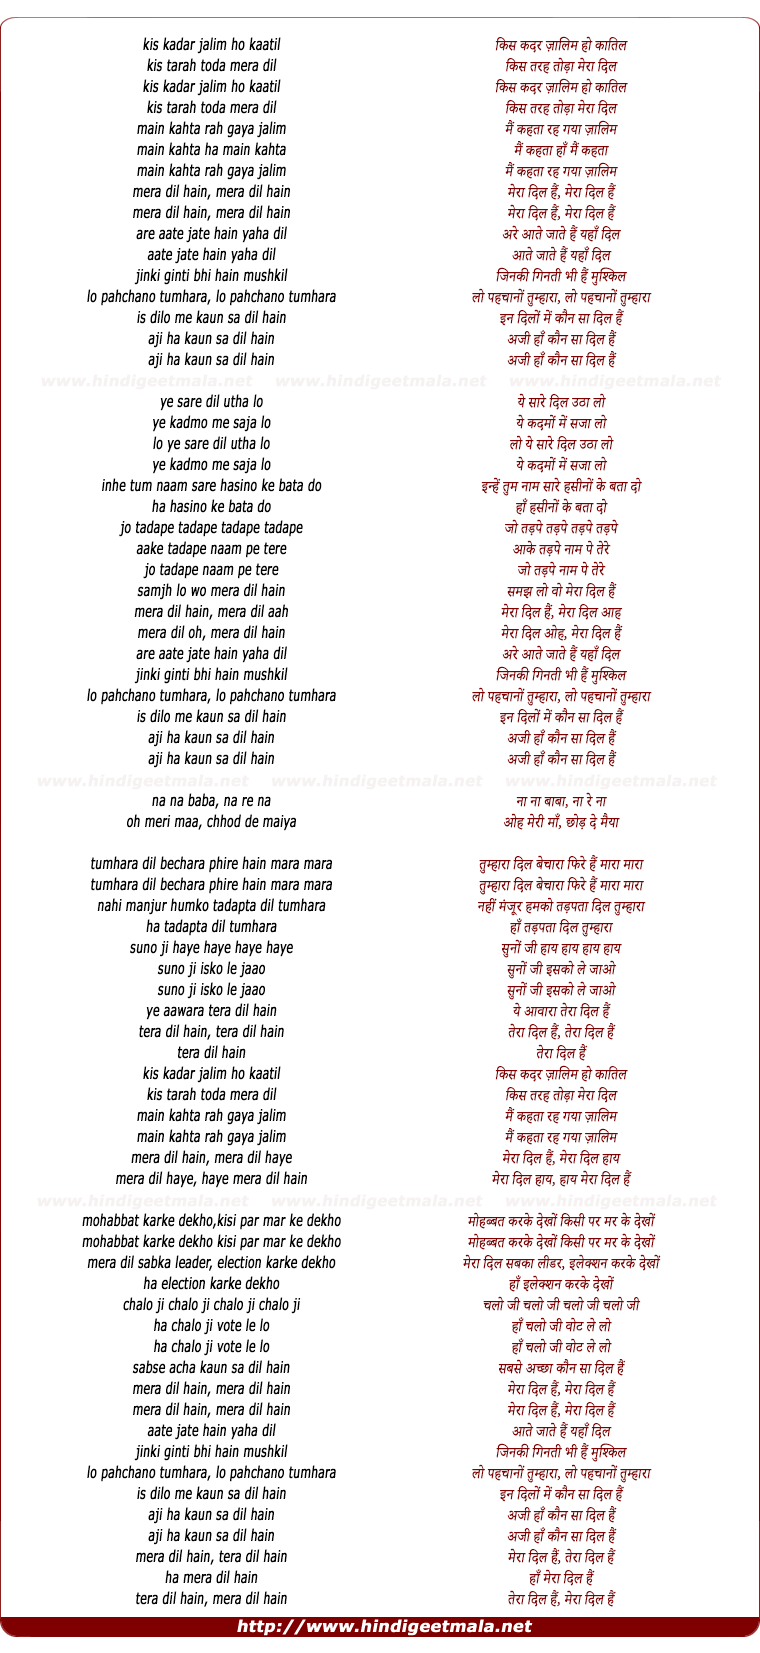 lyrics of song Kis Kadar Zalim Ho Qatil